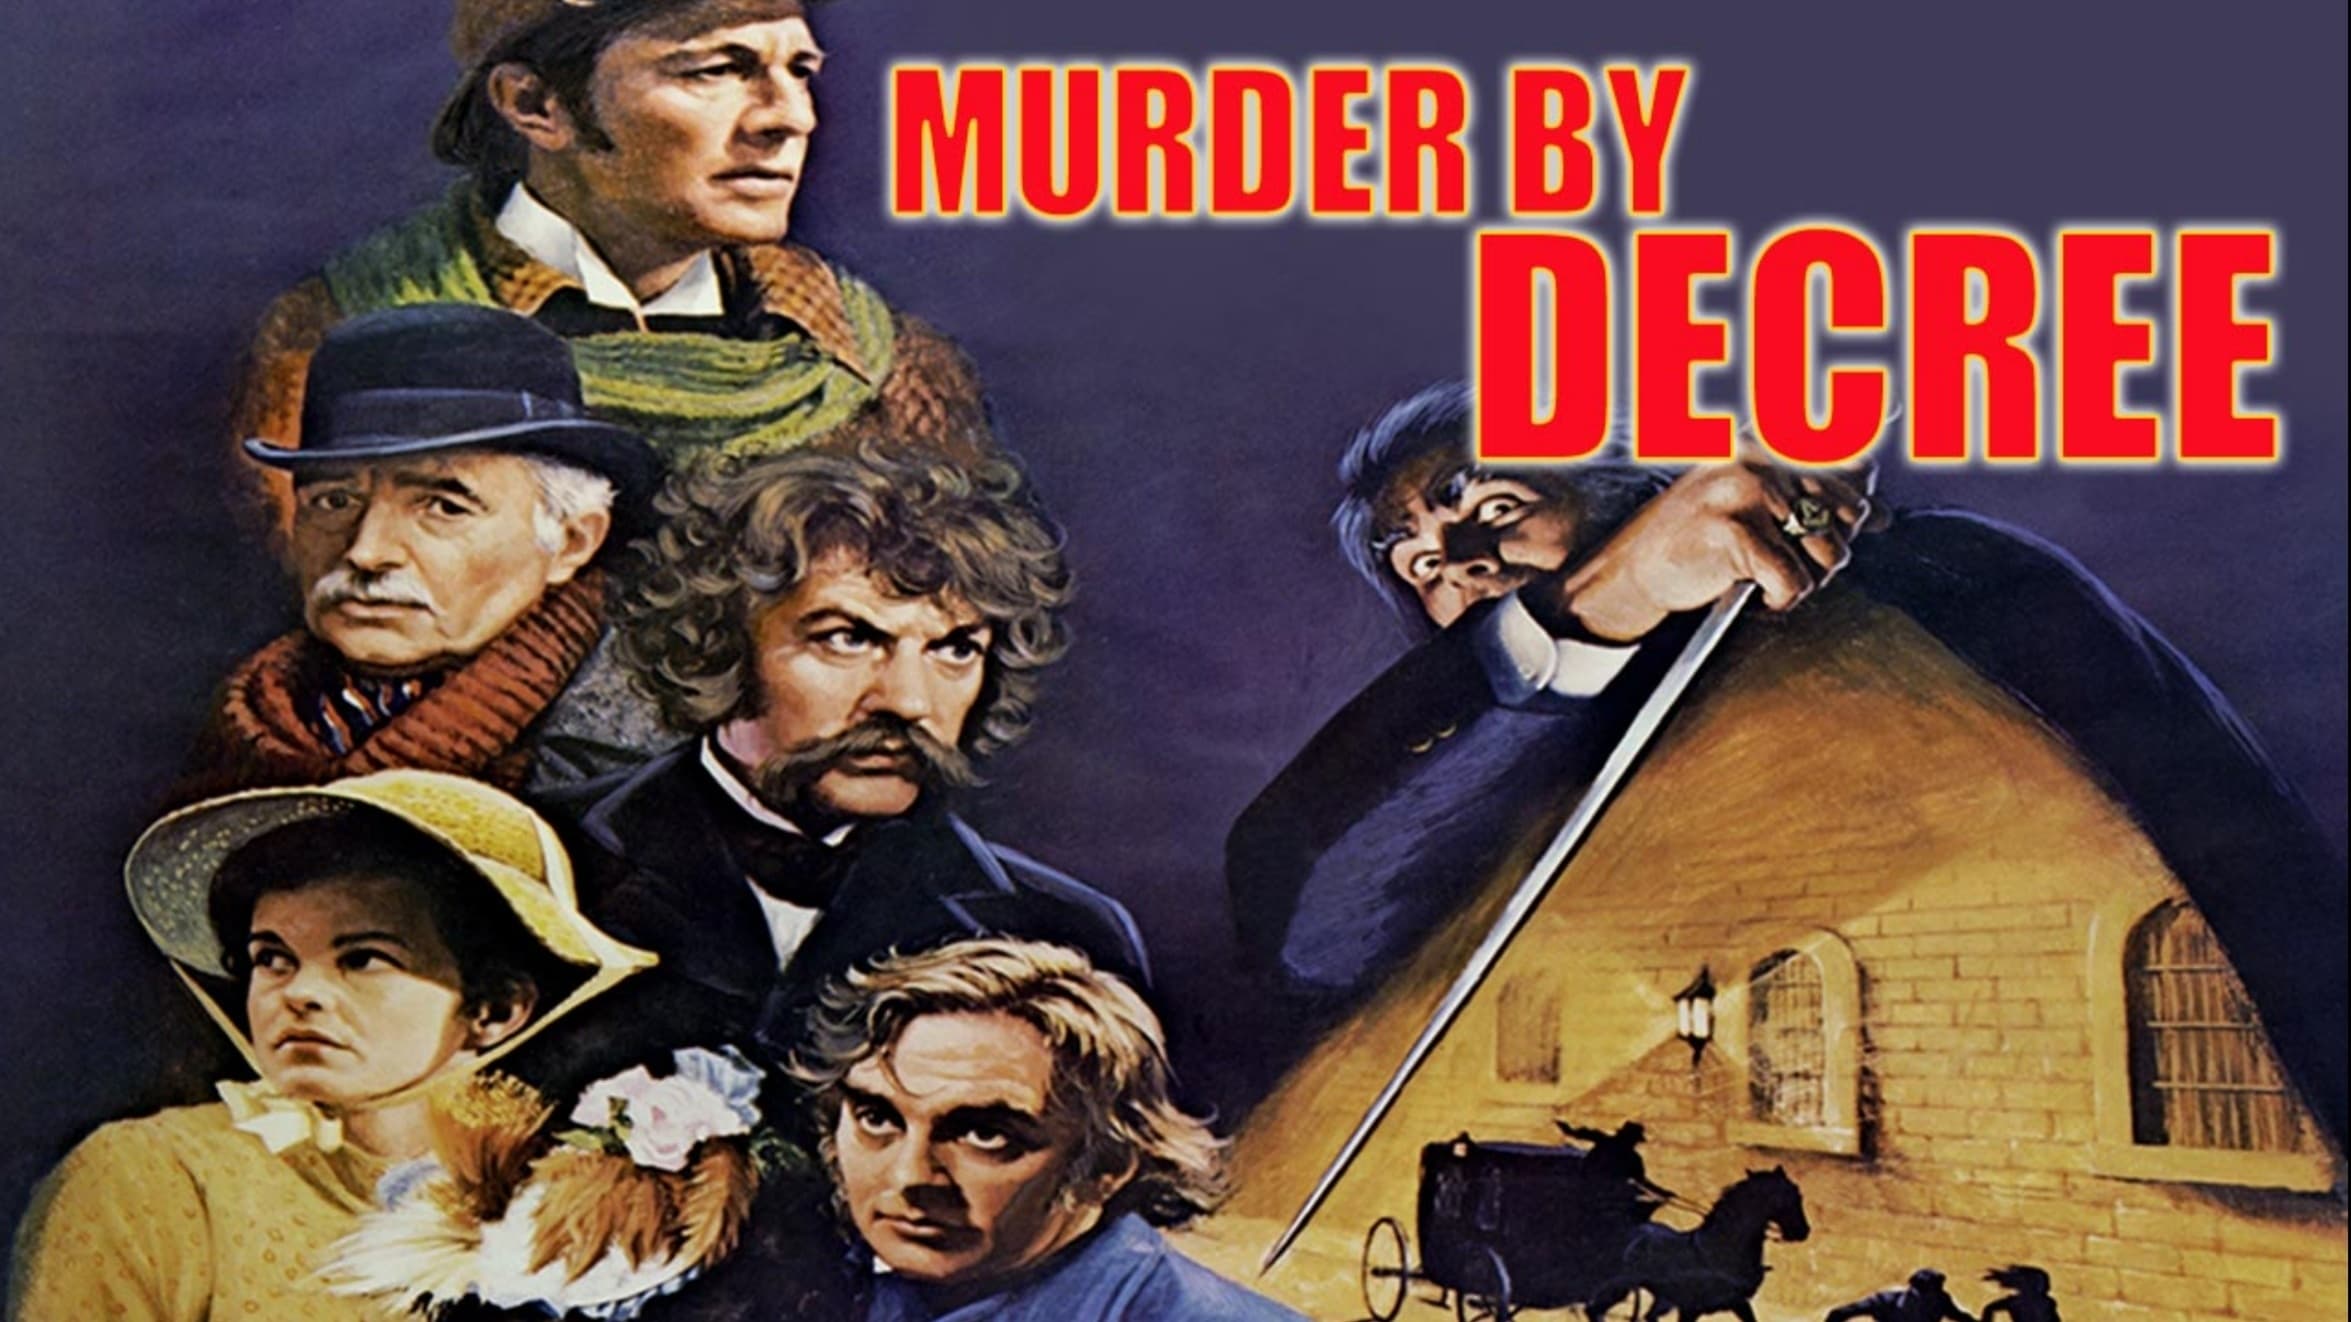 Vražda na úrovni (1979)